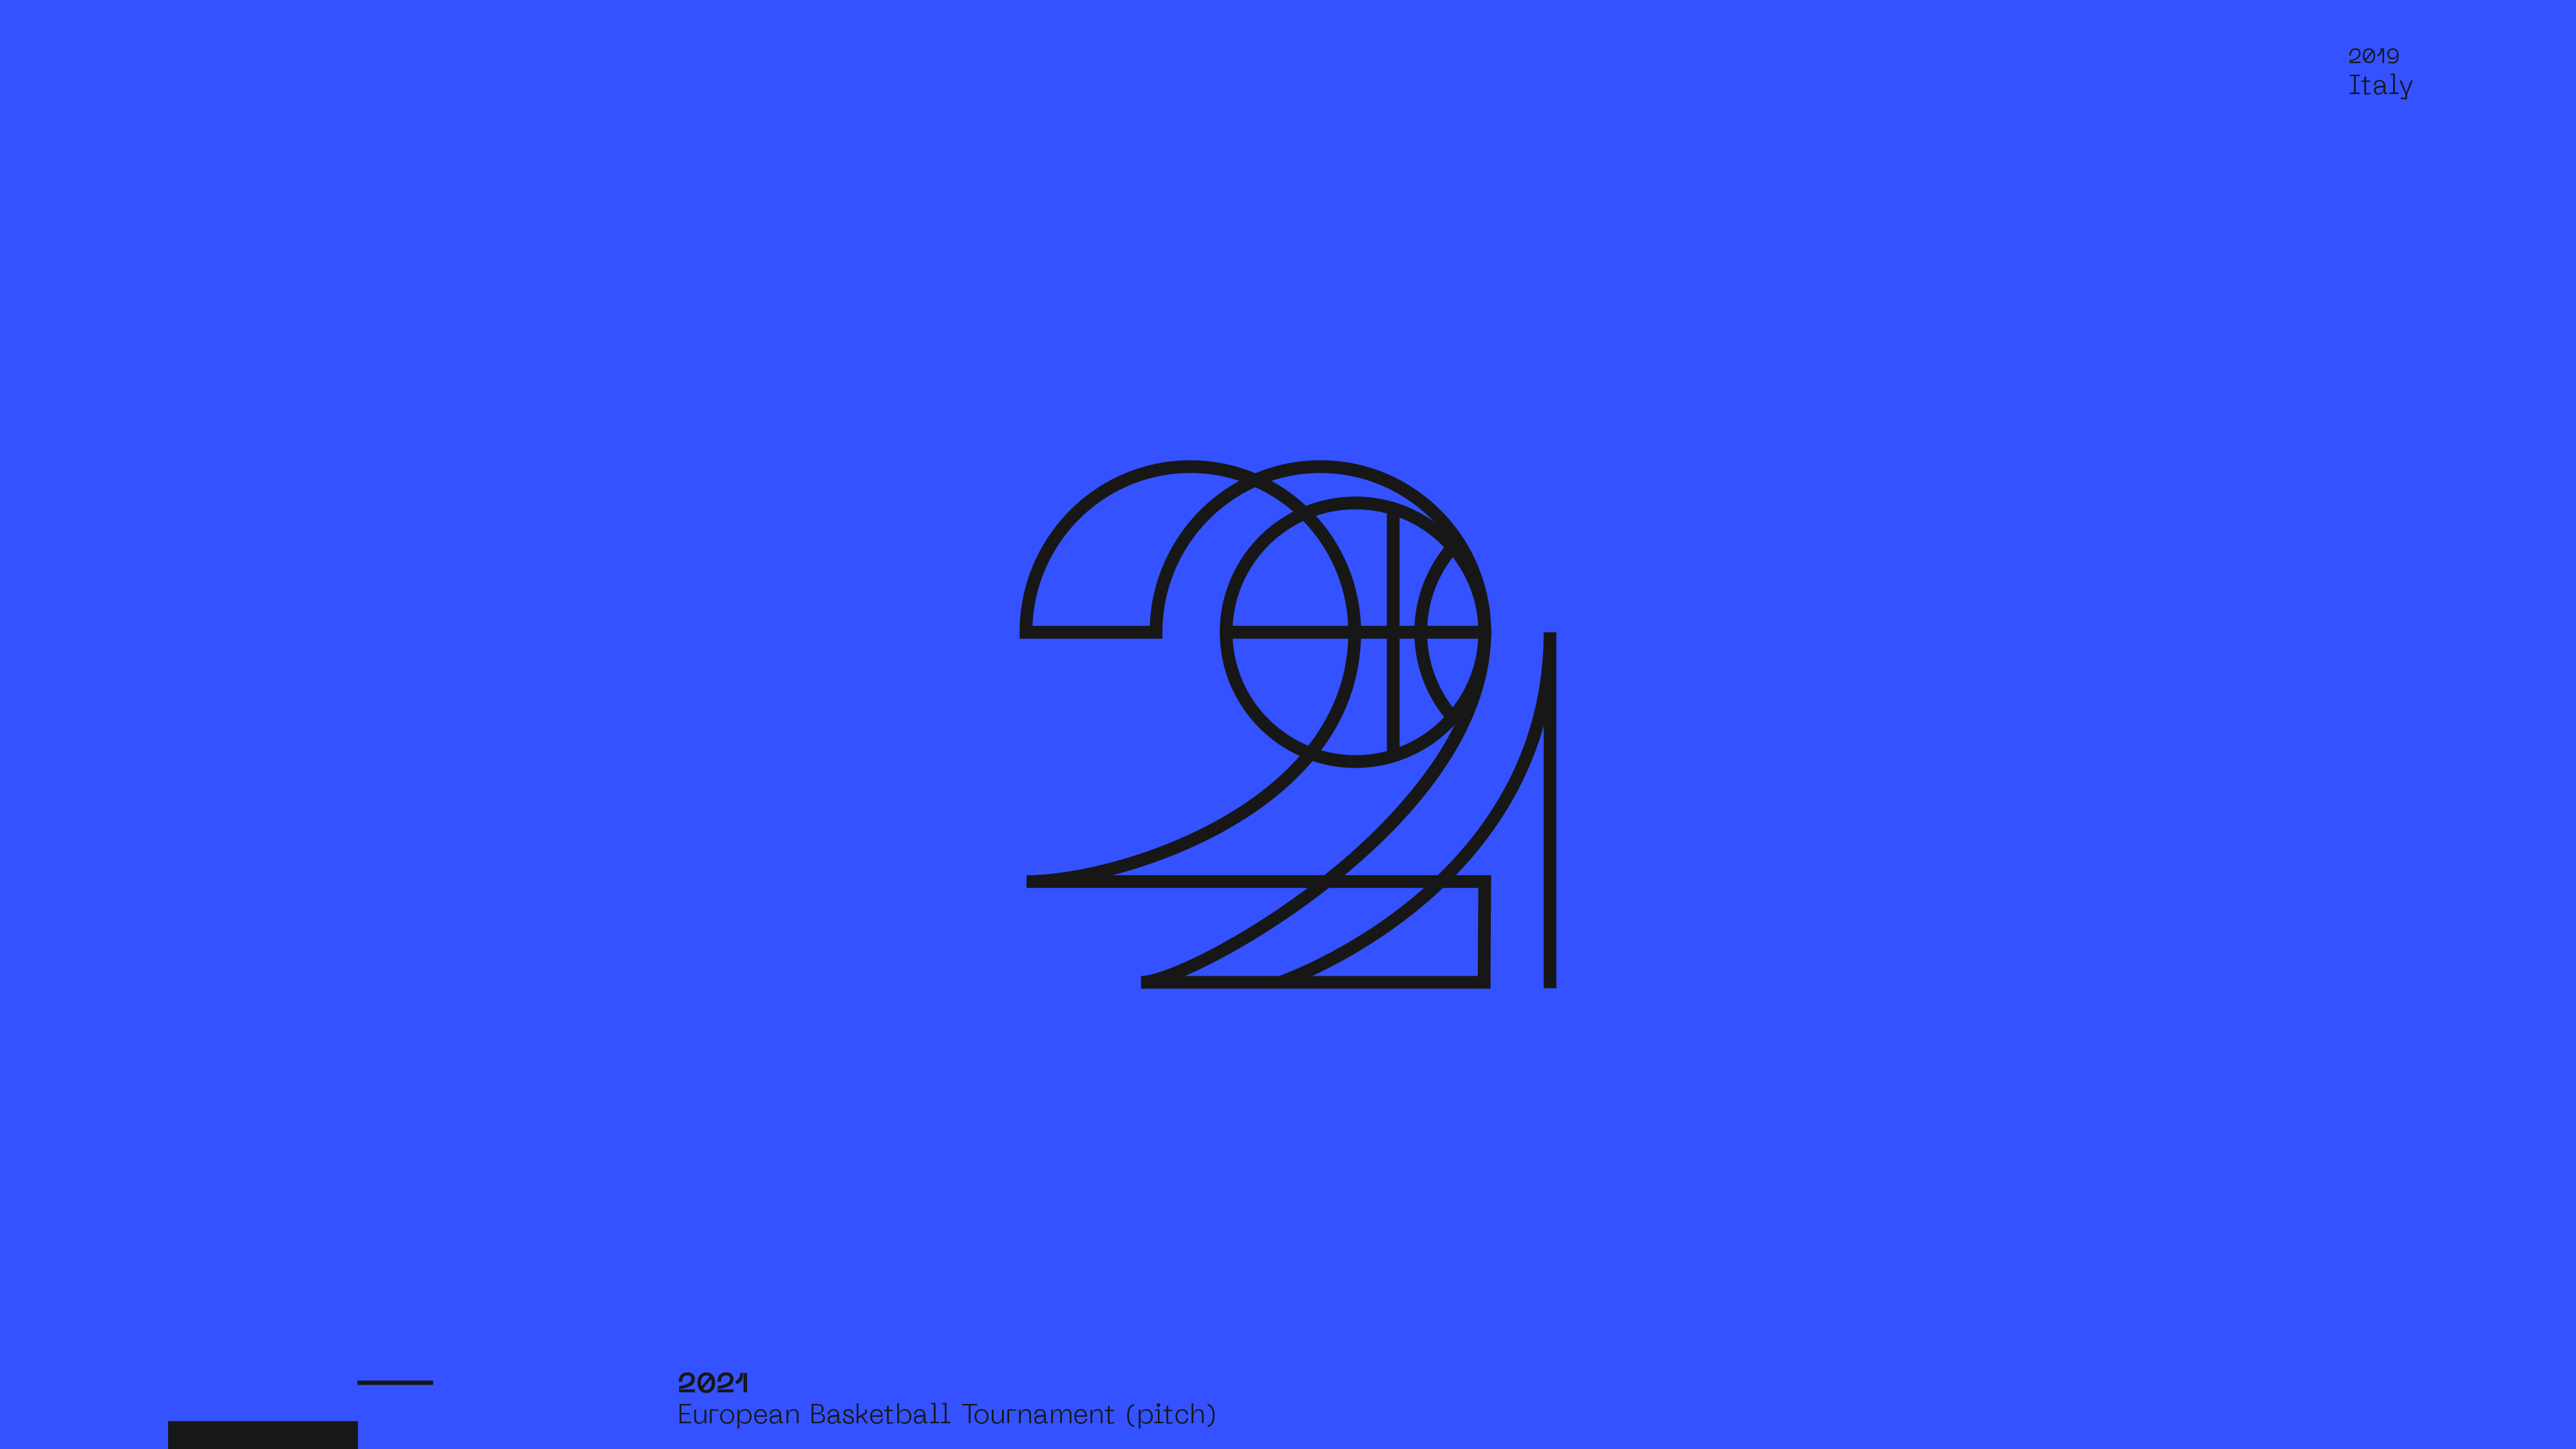 Guapo Design Studio by Esteban Ibarra Logofolio 2019 logo designer — 2021 Basket Championiship